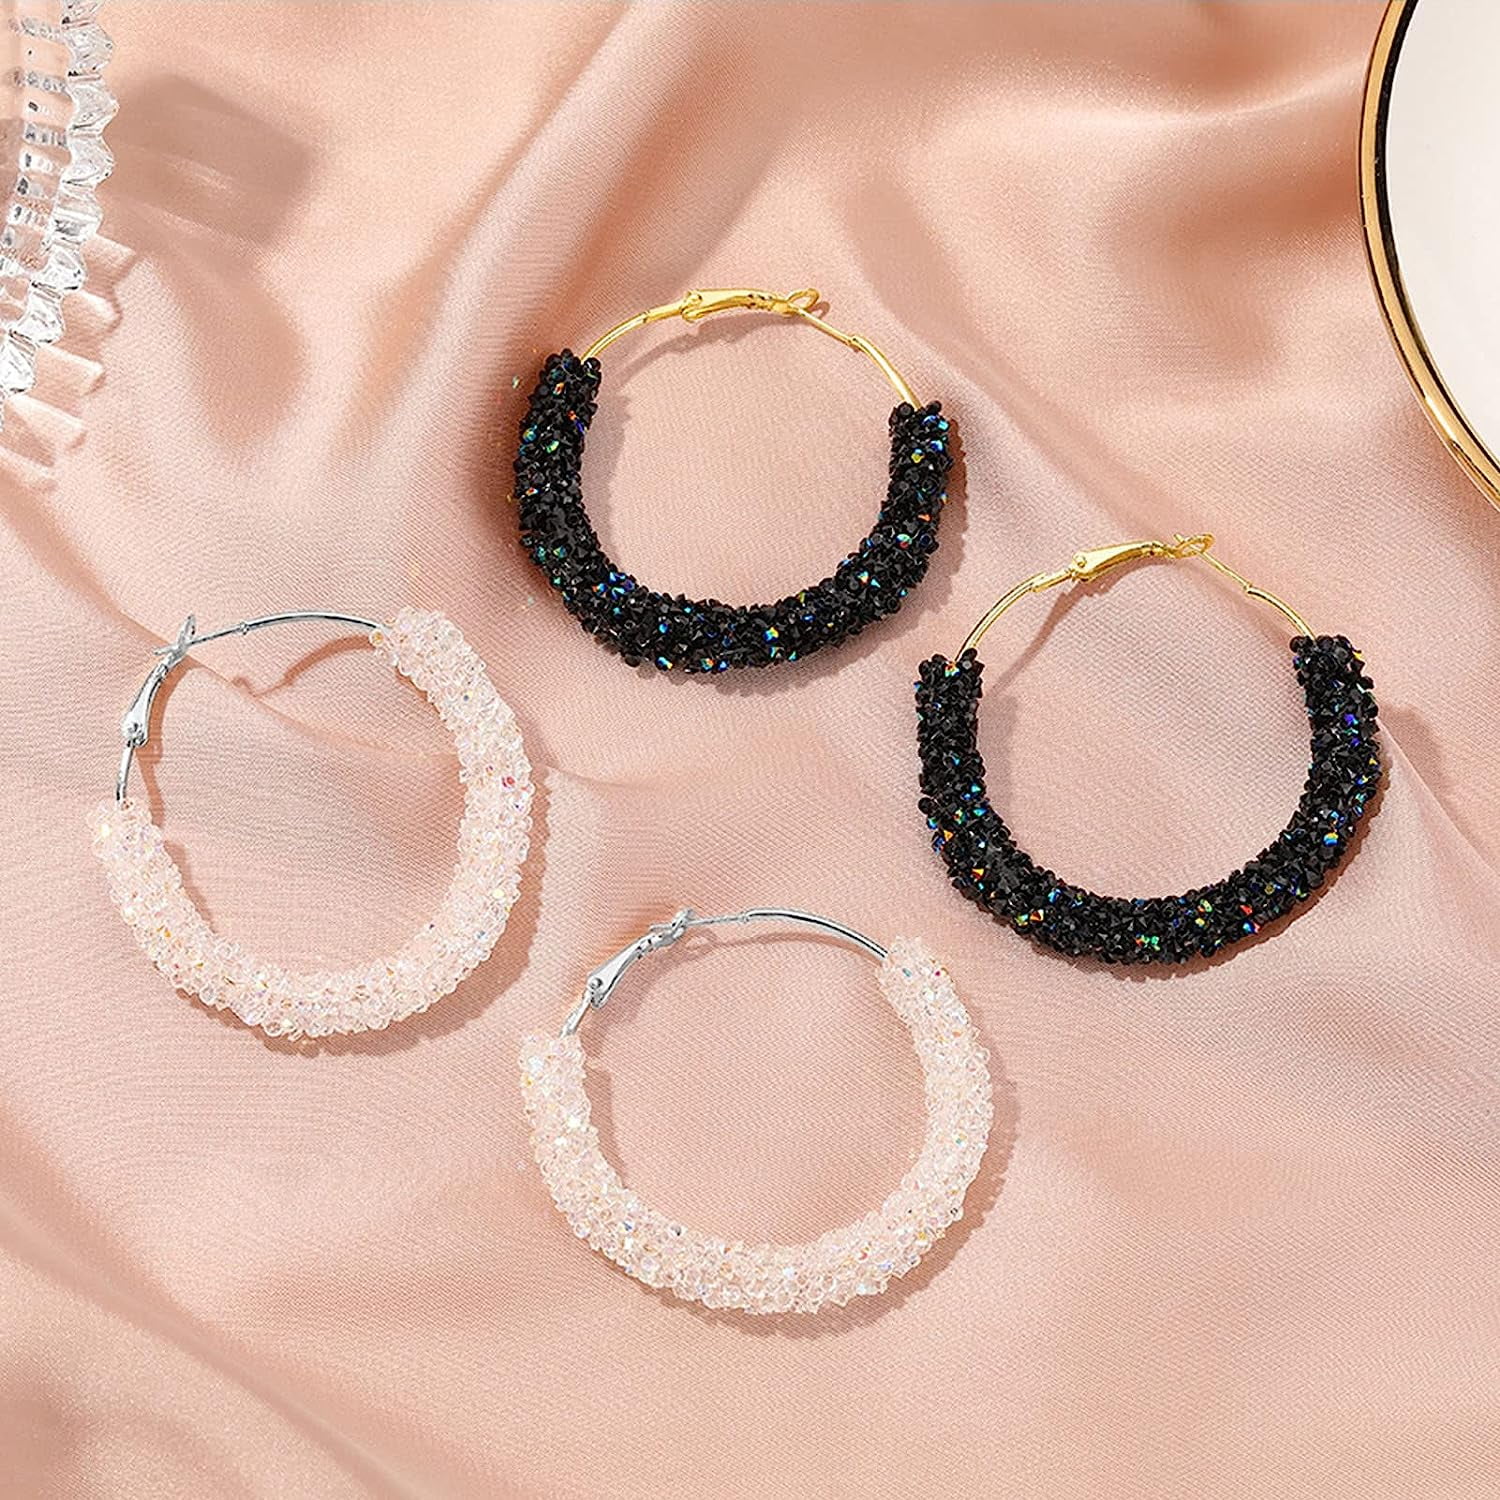 56pcs Hoop Earrings for Jewelry Making,Earring Beading Hoop Round Beading  Hoop Open Beading Hoop Big Hoop Earrings for Women Girls Gift DIY Crafts(2  Colors,7 Sizes) 